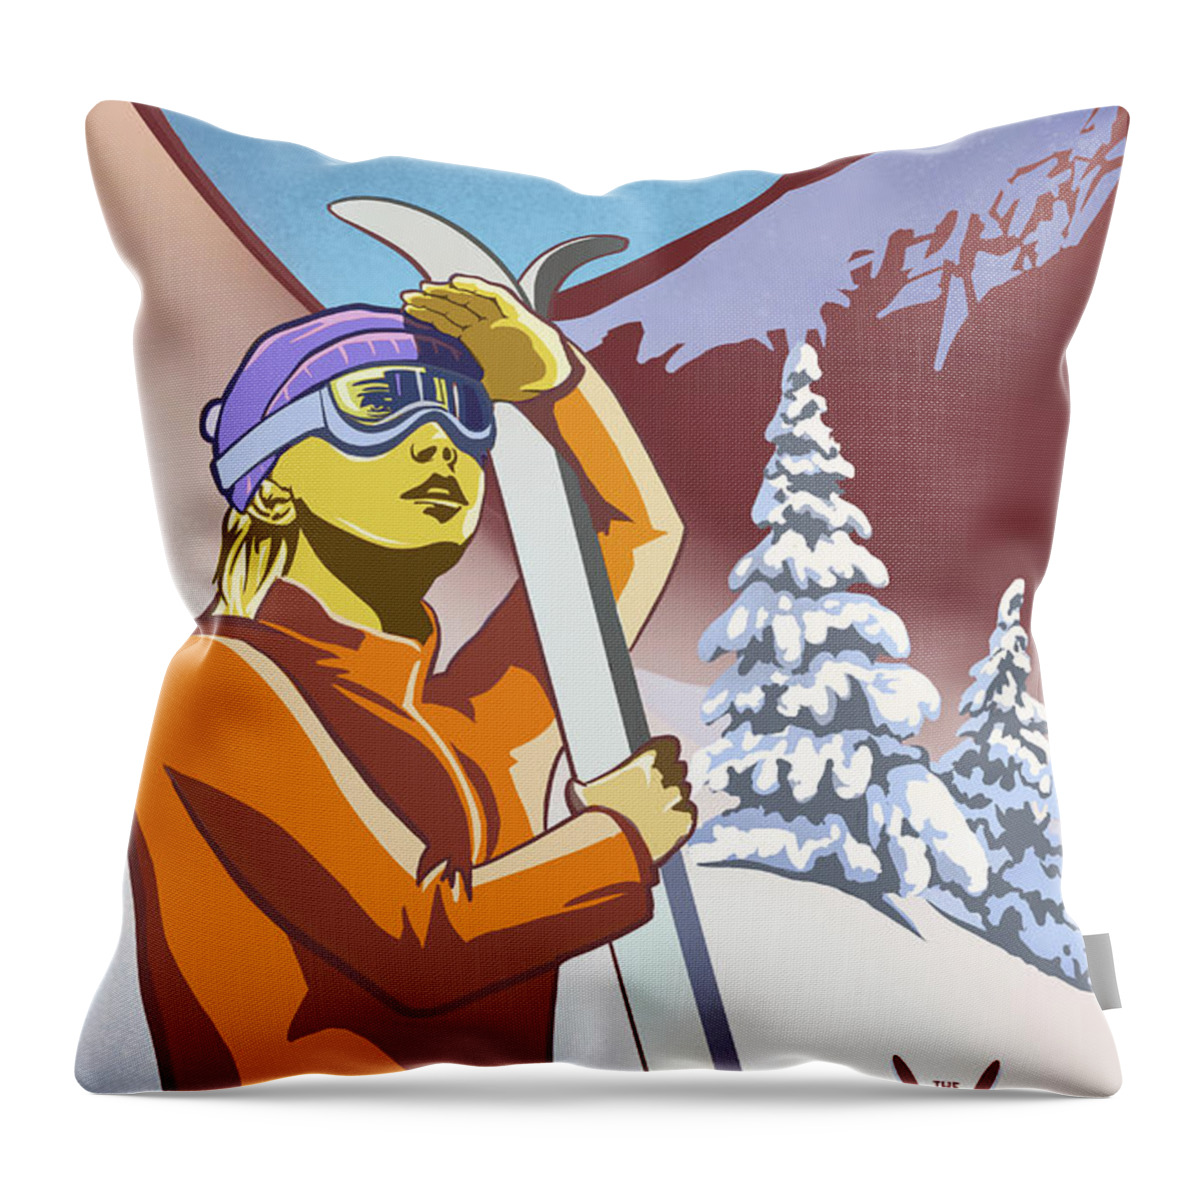 Retro Ski Poster Throw Pillow featuring the painting Ski the Rocky Mountains by Sassan Filsoof